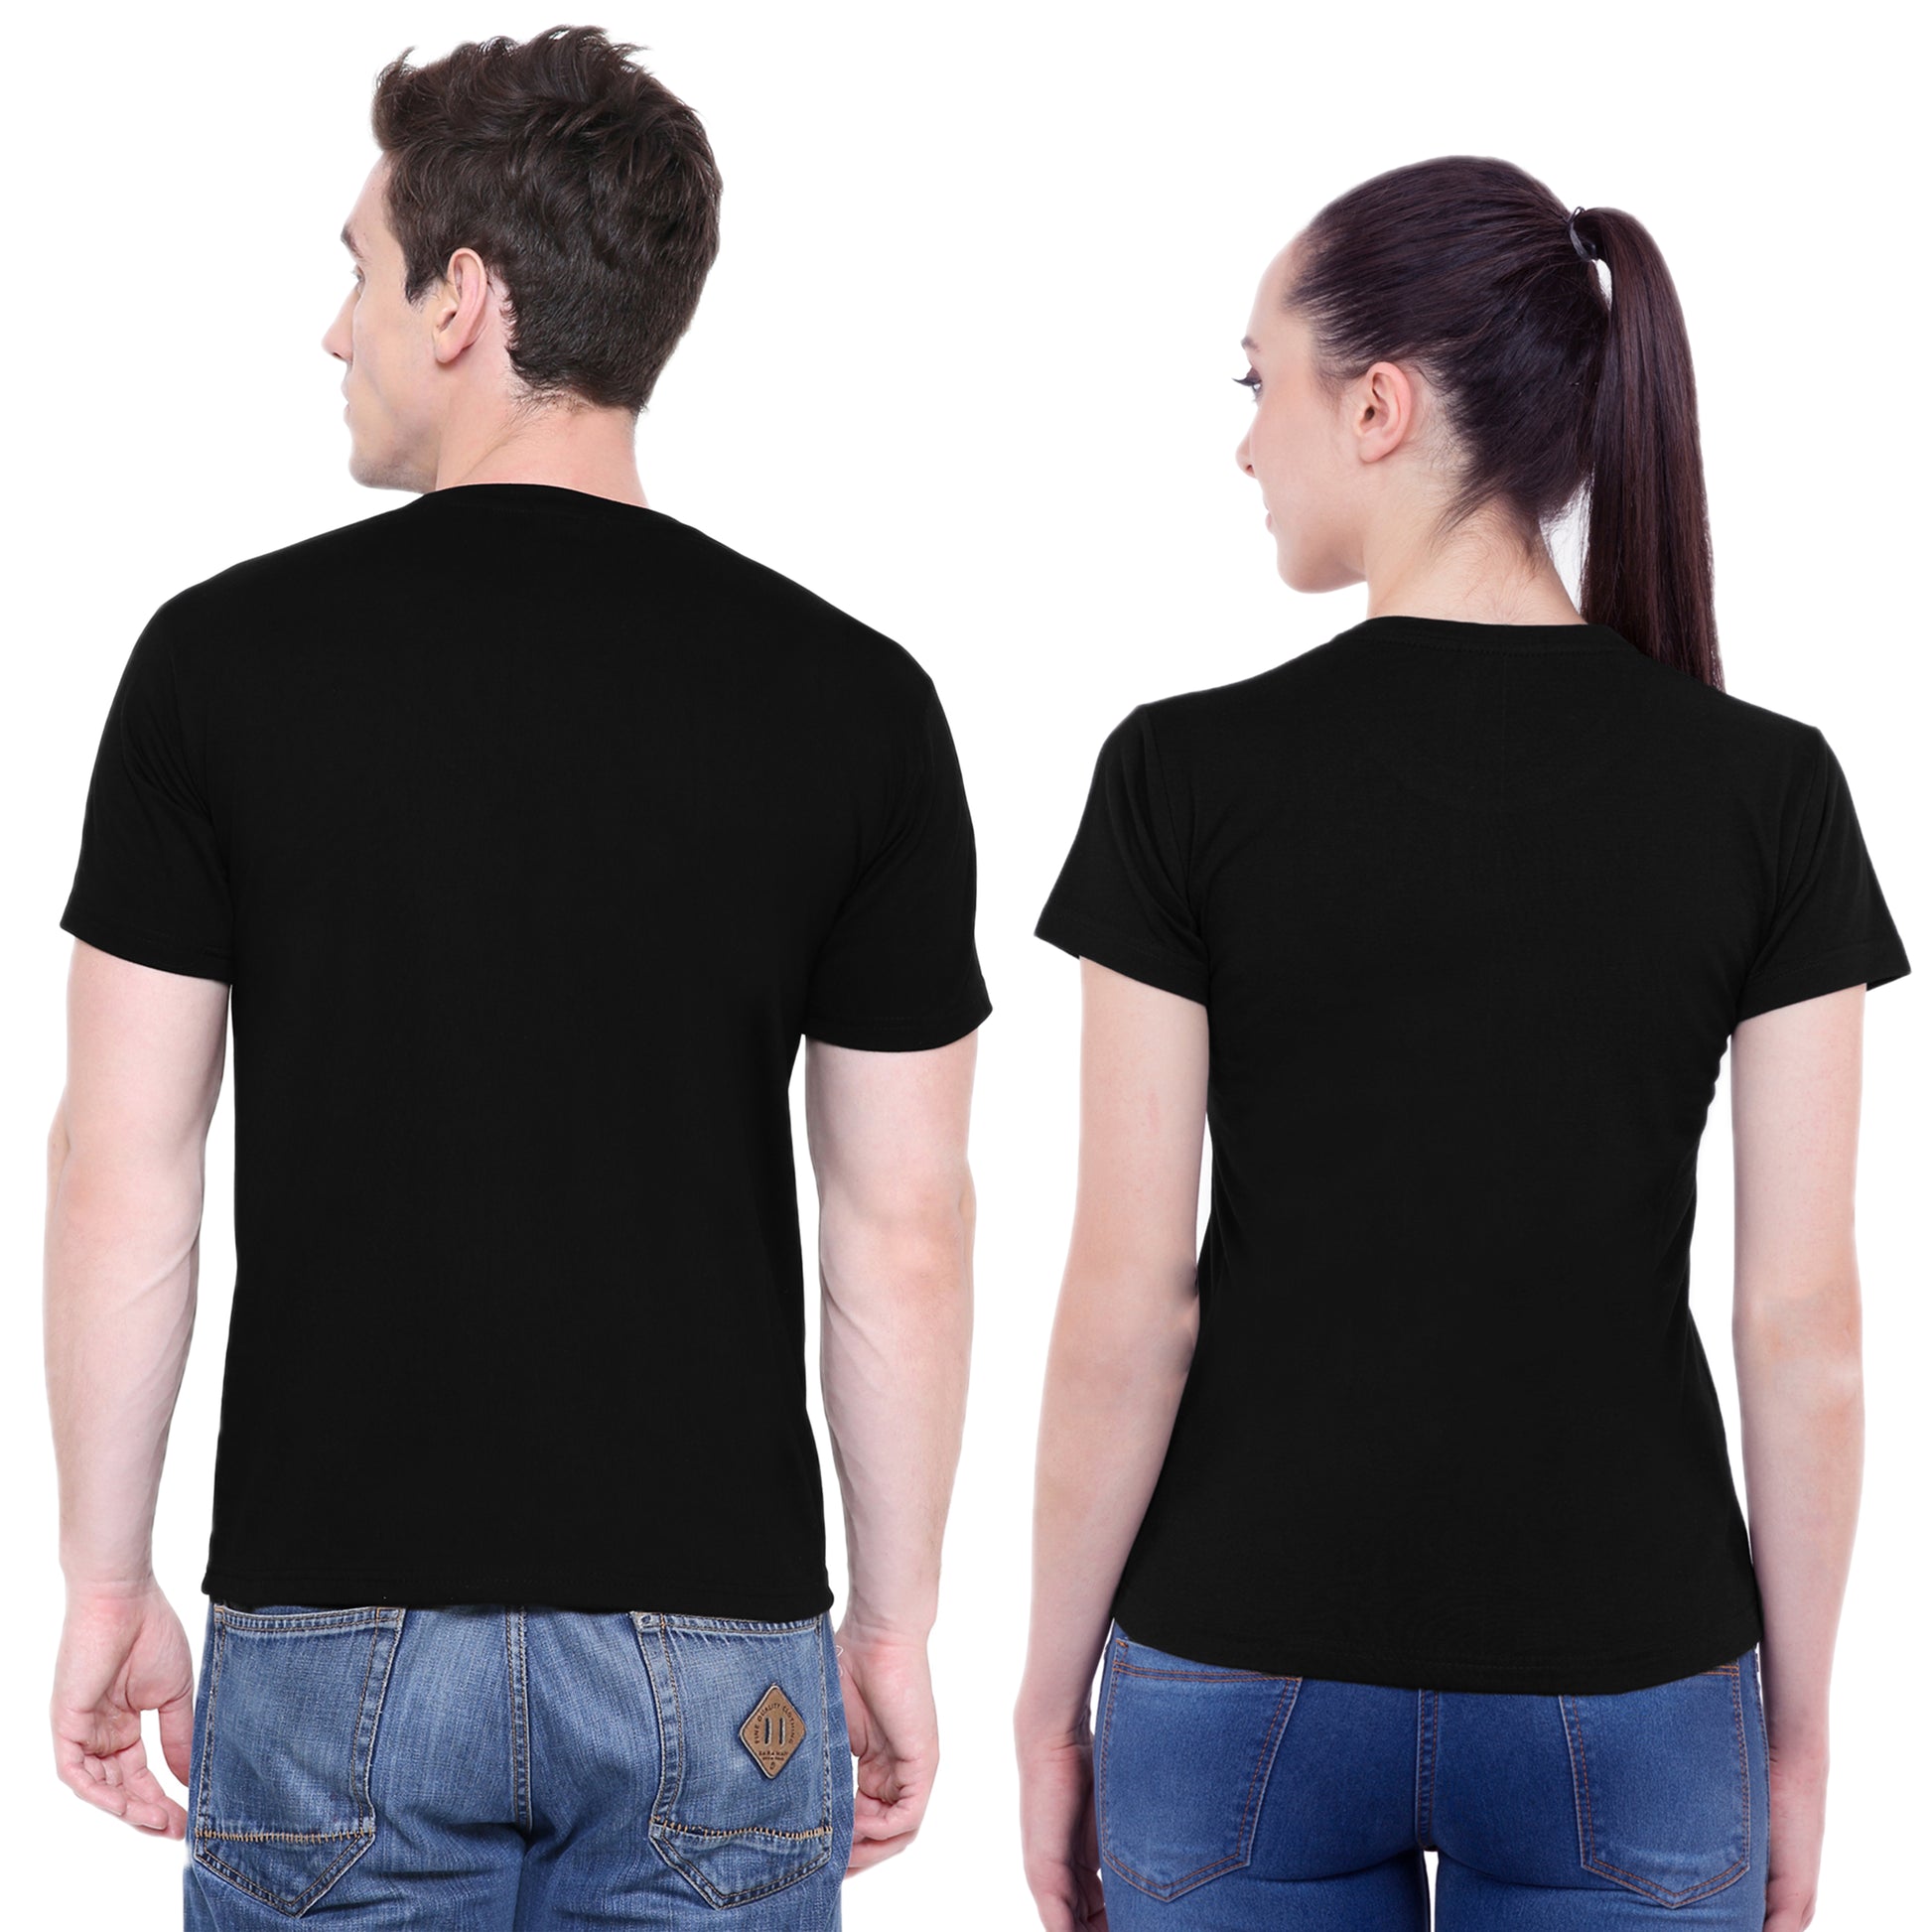 Love Wings matching Couple T shirts- Black